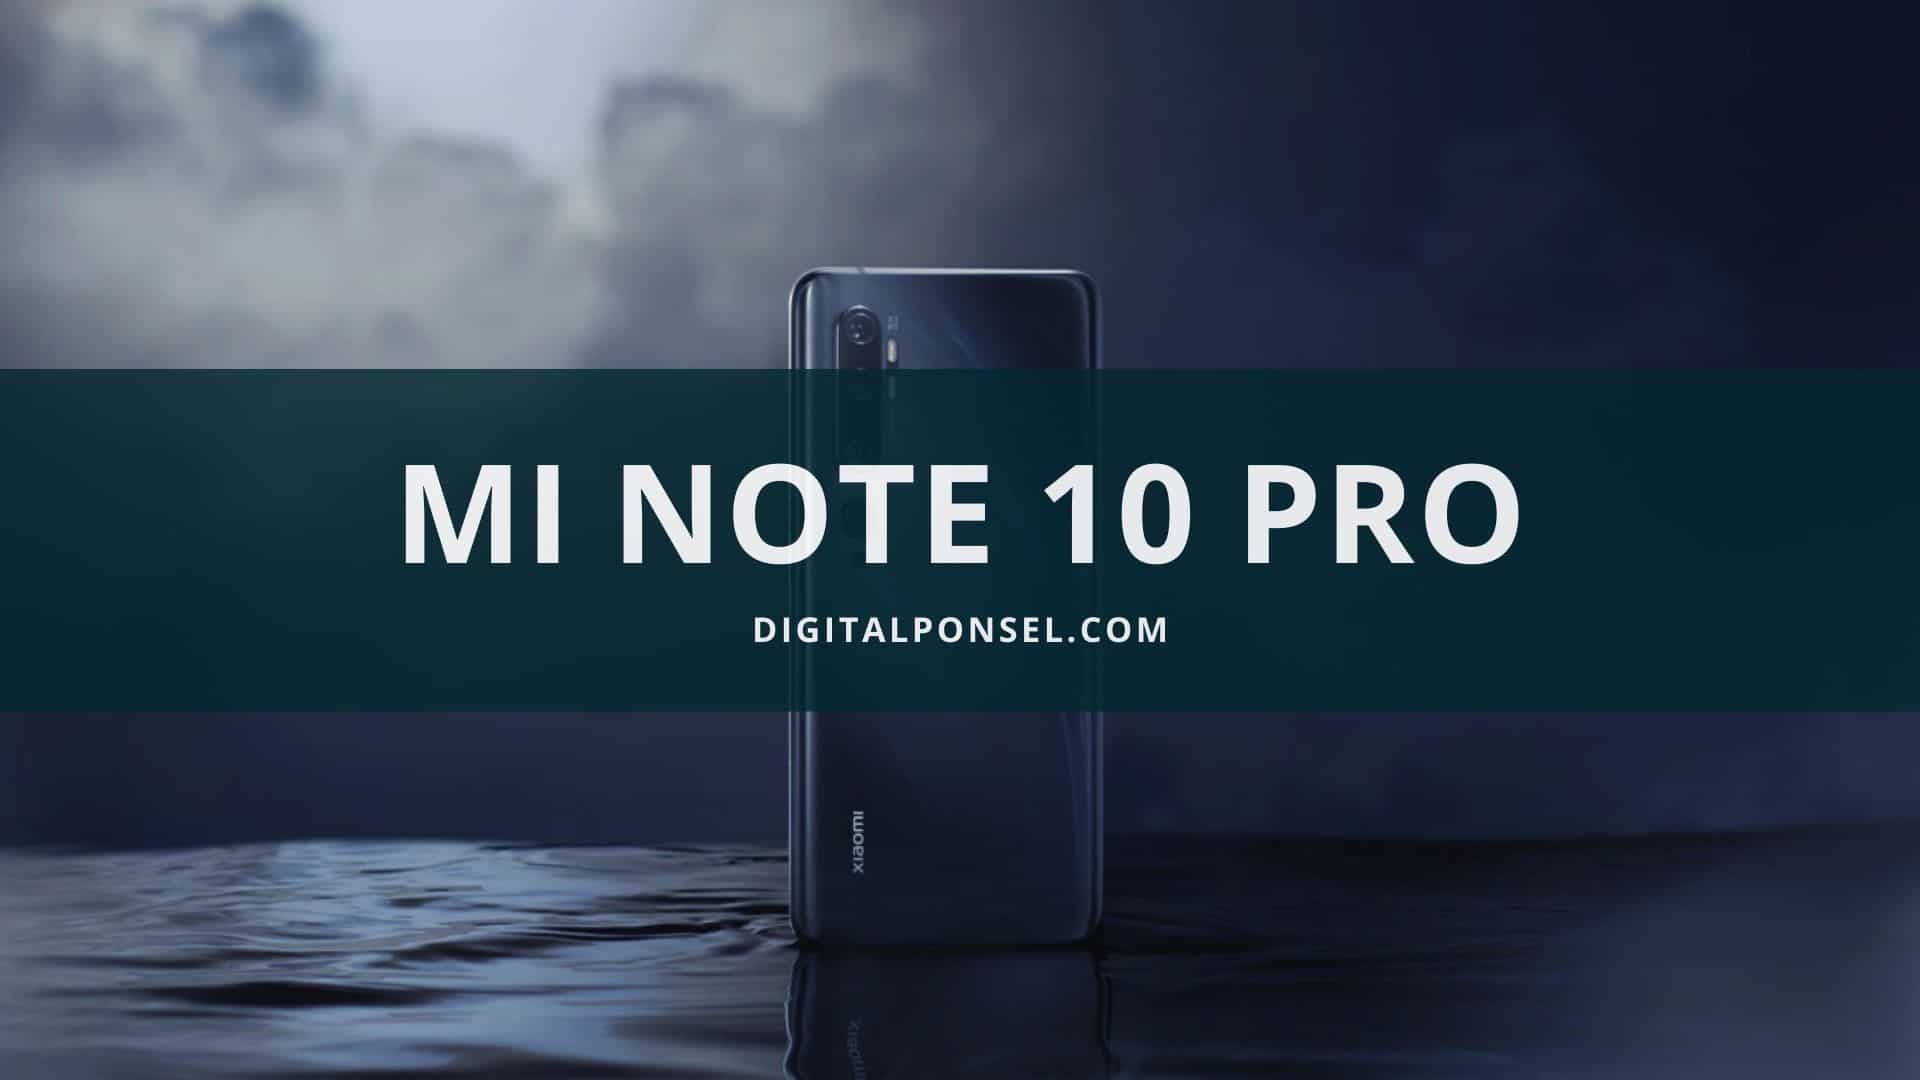 Harga Xiaomi Mi Note 10 Pro Terbaru dan Spesifikasi